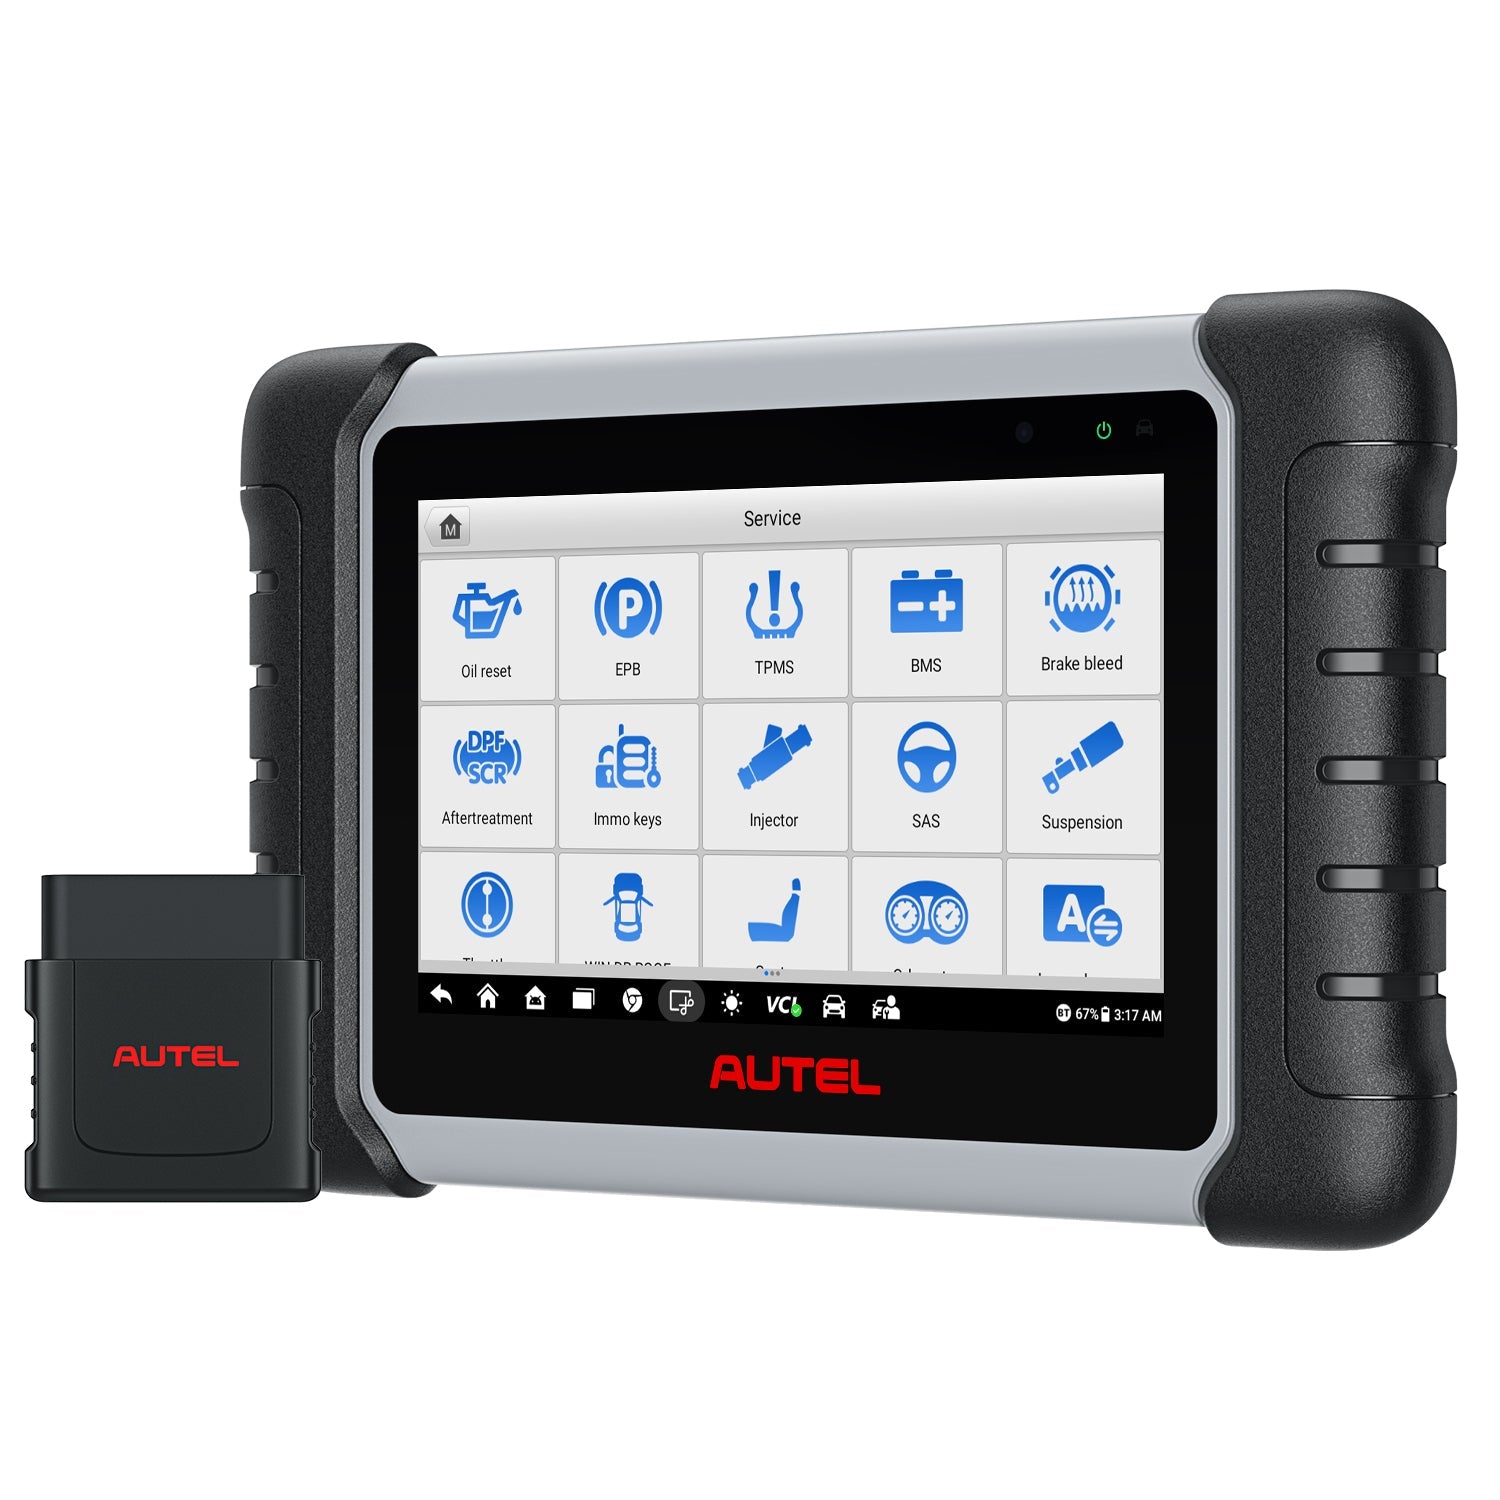 Autel MaxiPro MP808BT Pro Services and VCI Mini